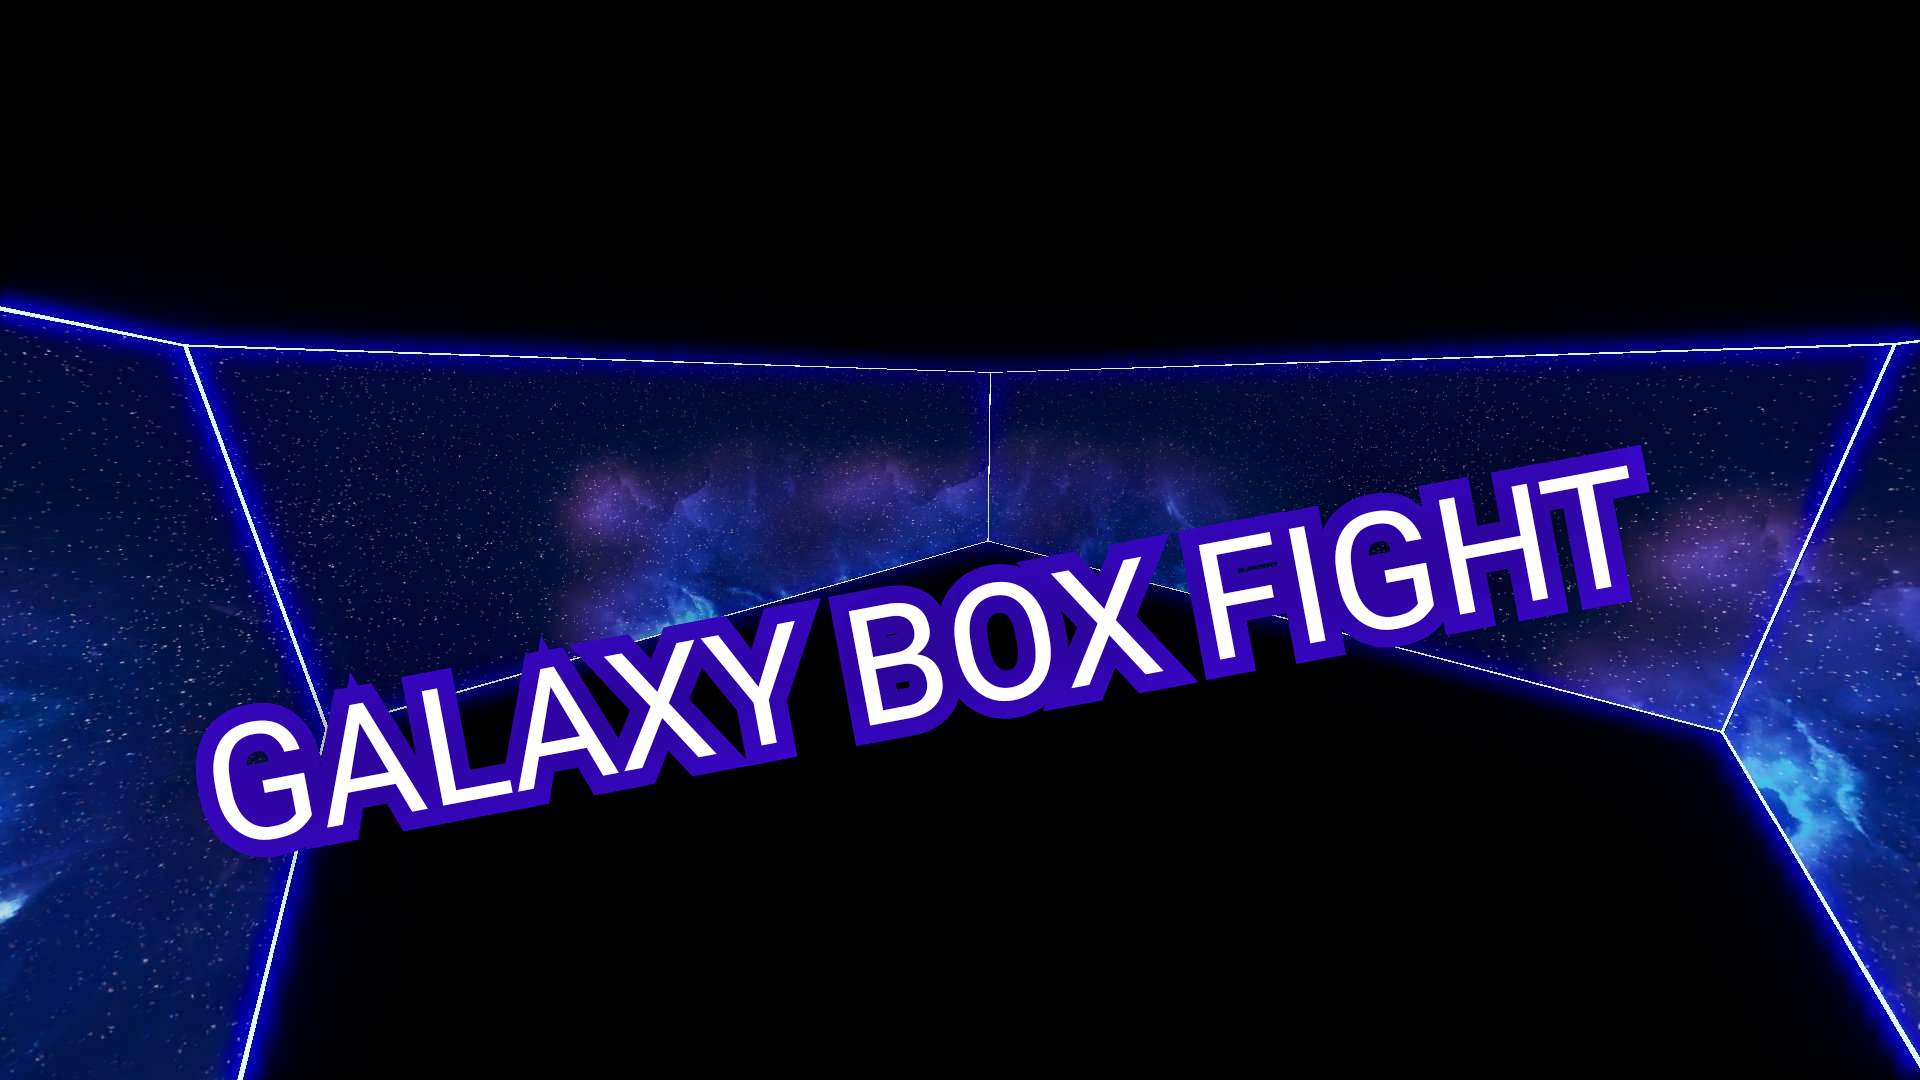 / GALAXY BOX FIGHT \